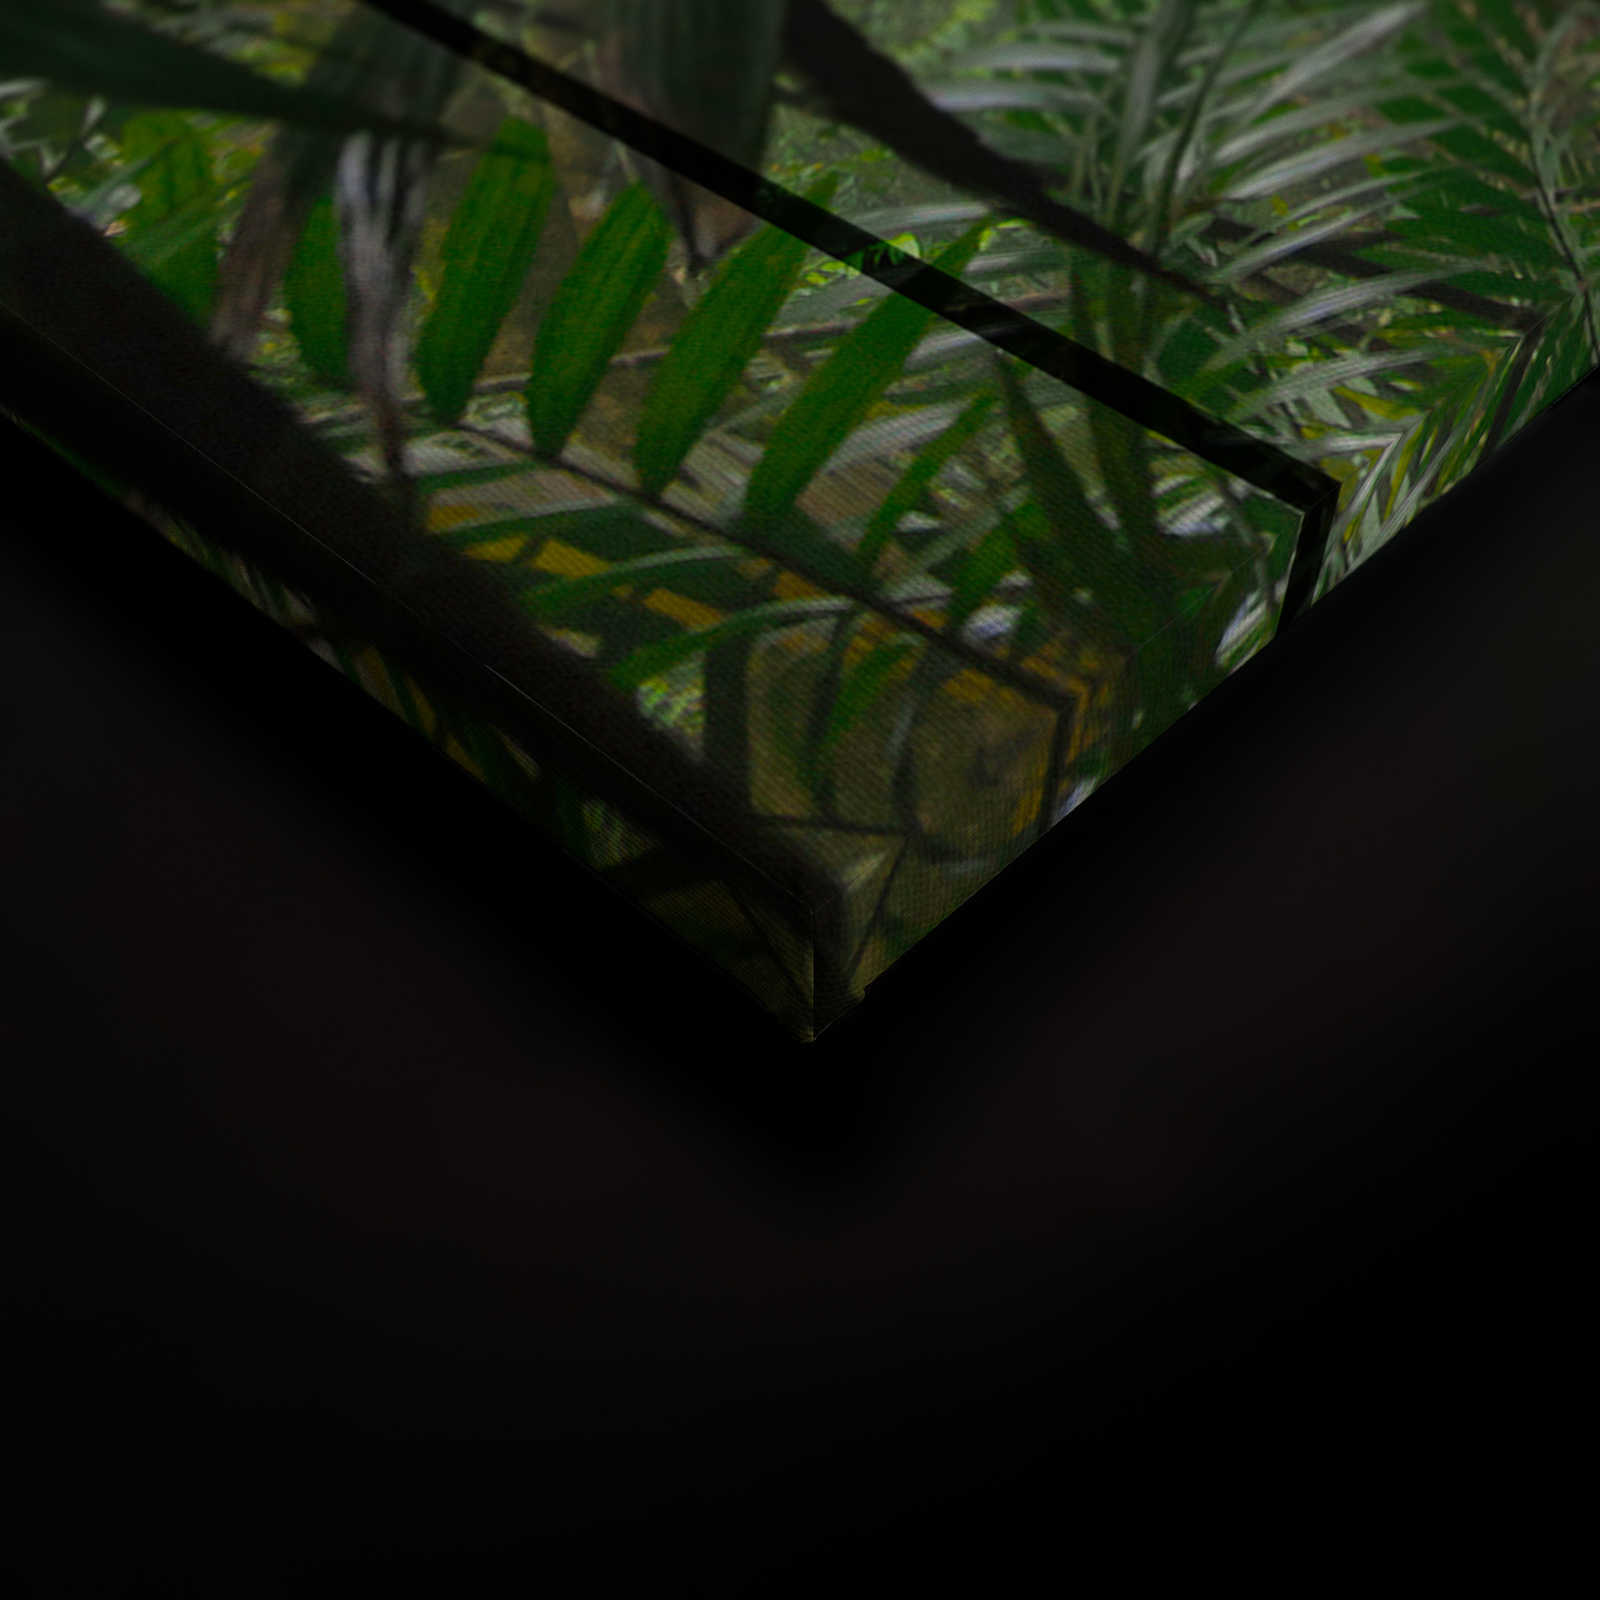             Rainforest 1 - Loftfenster Leinwandbild mit Dschungel Aussicht – 0,90 m x 0,60 m
        